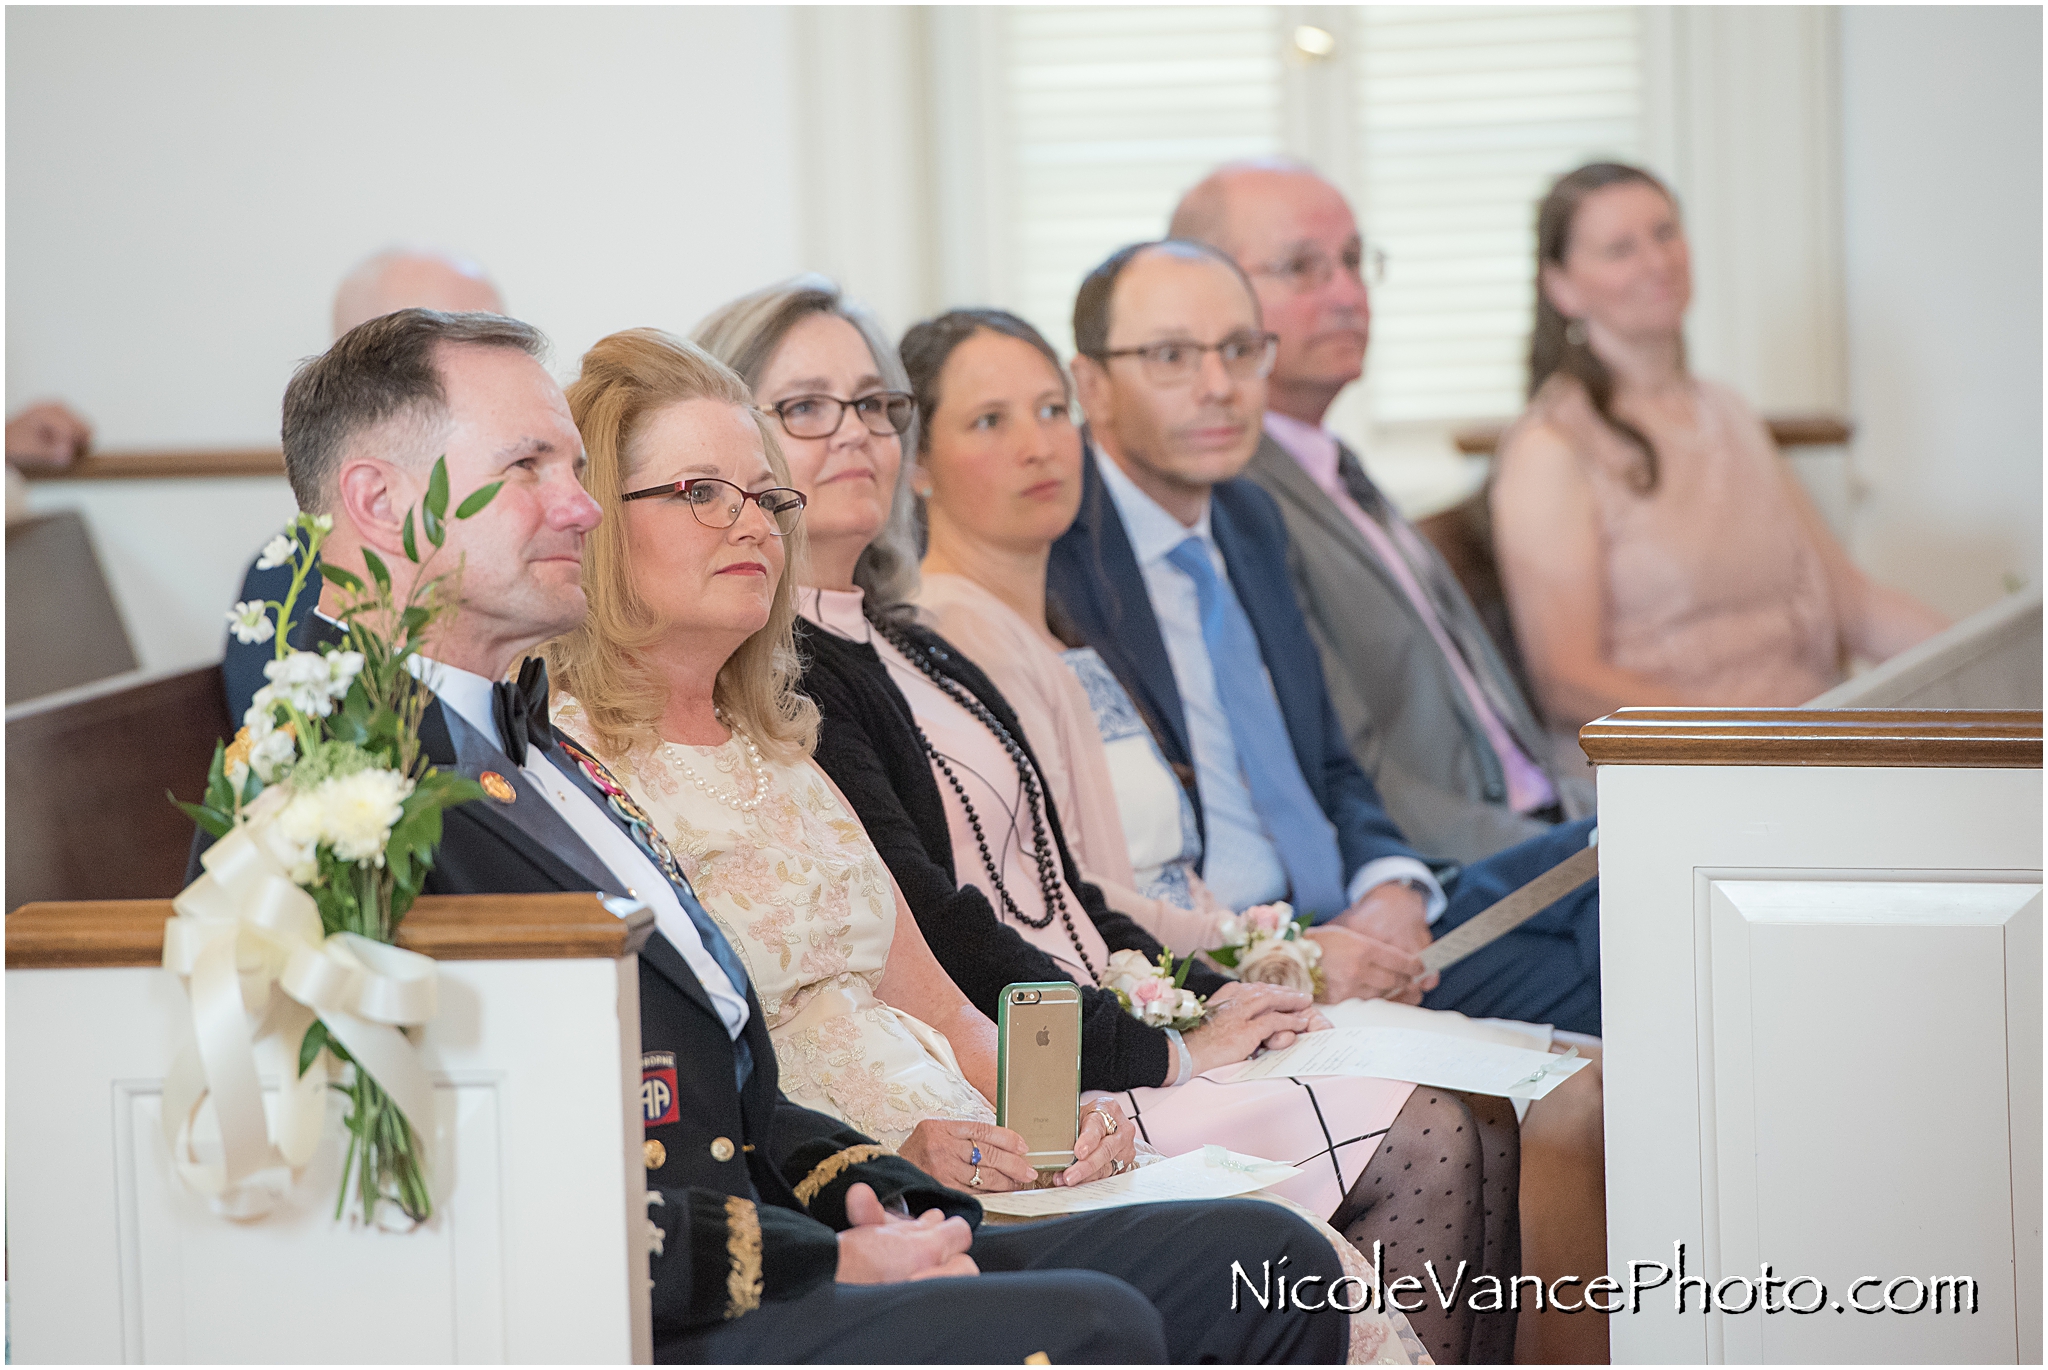 Guests enjoy the wedding ceremony at Crestwood Presbyterian Church in Richmond VA